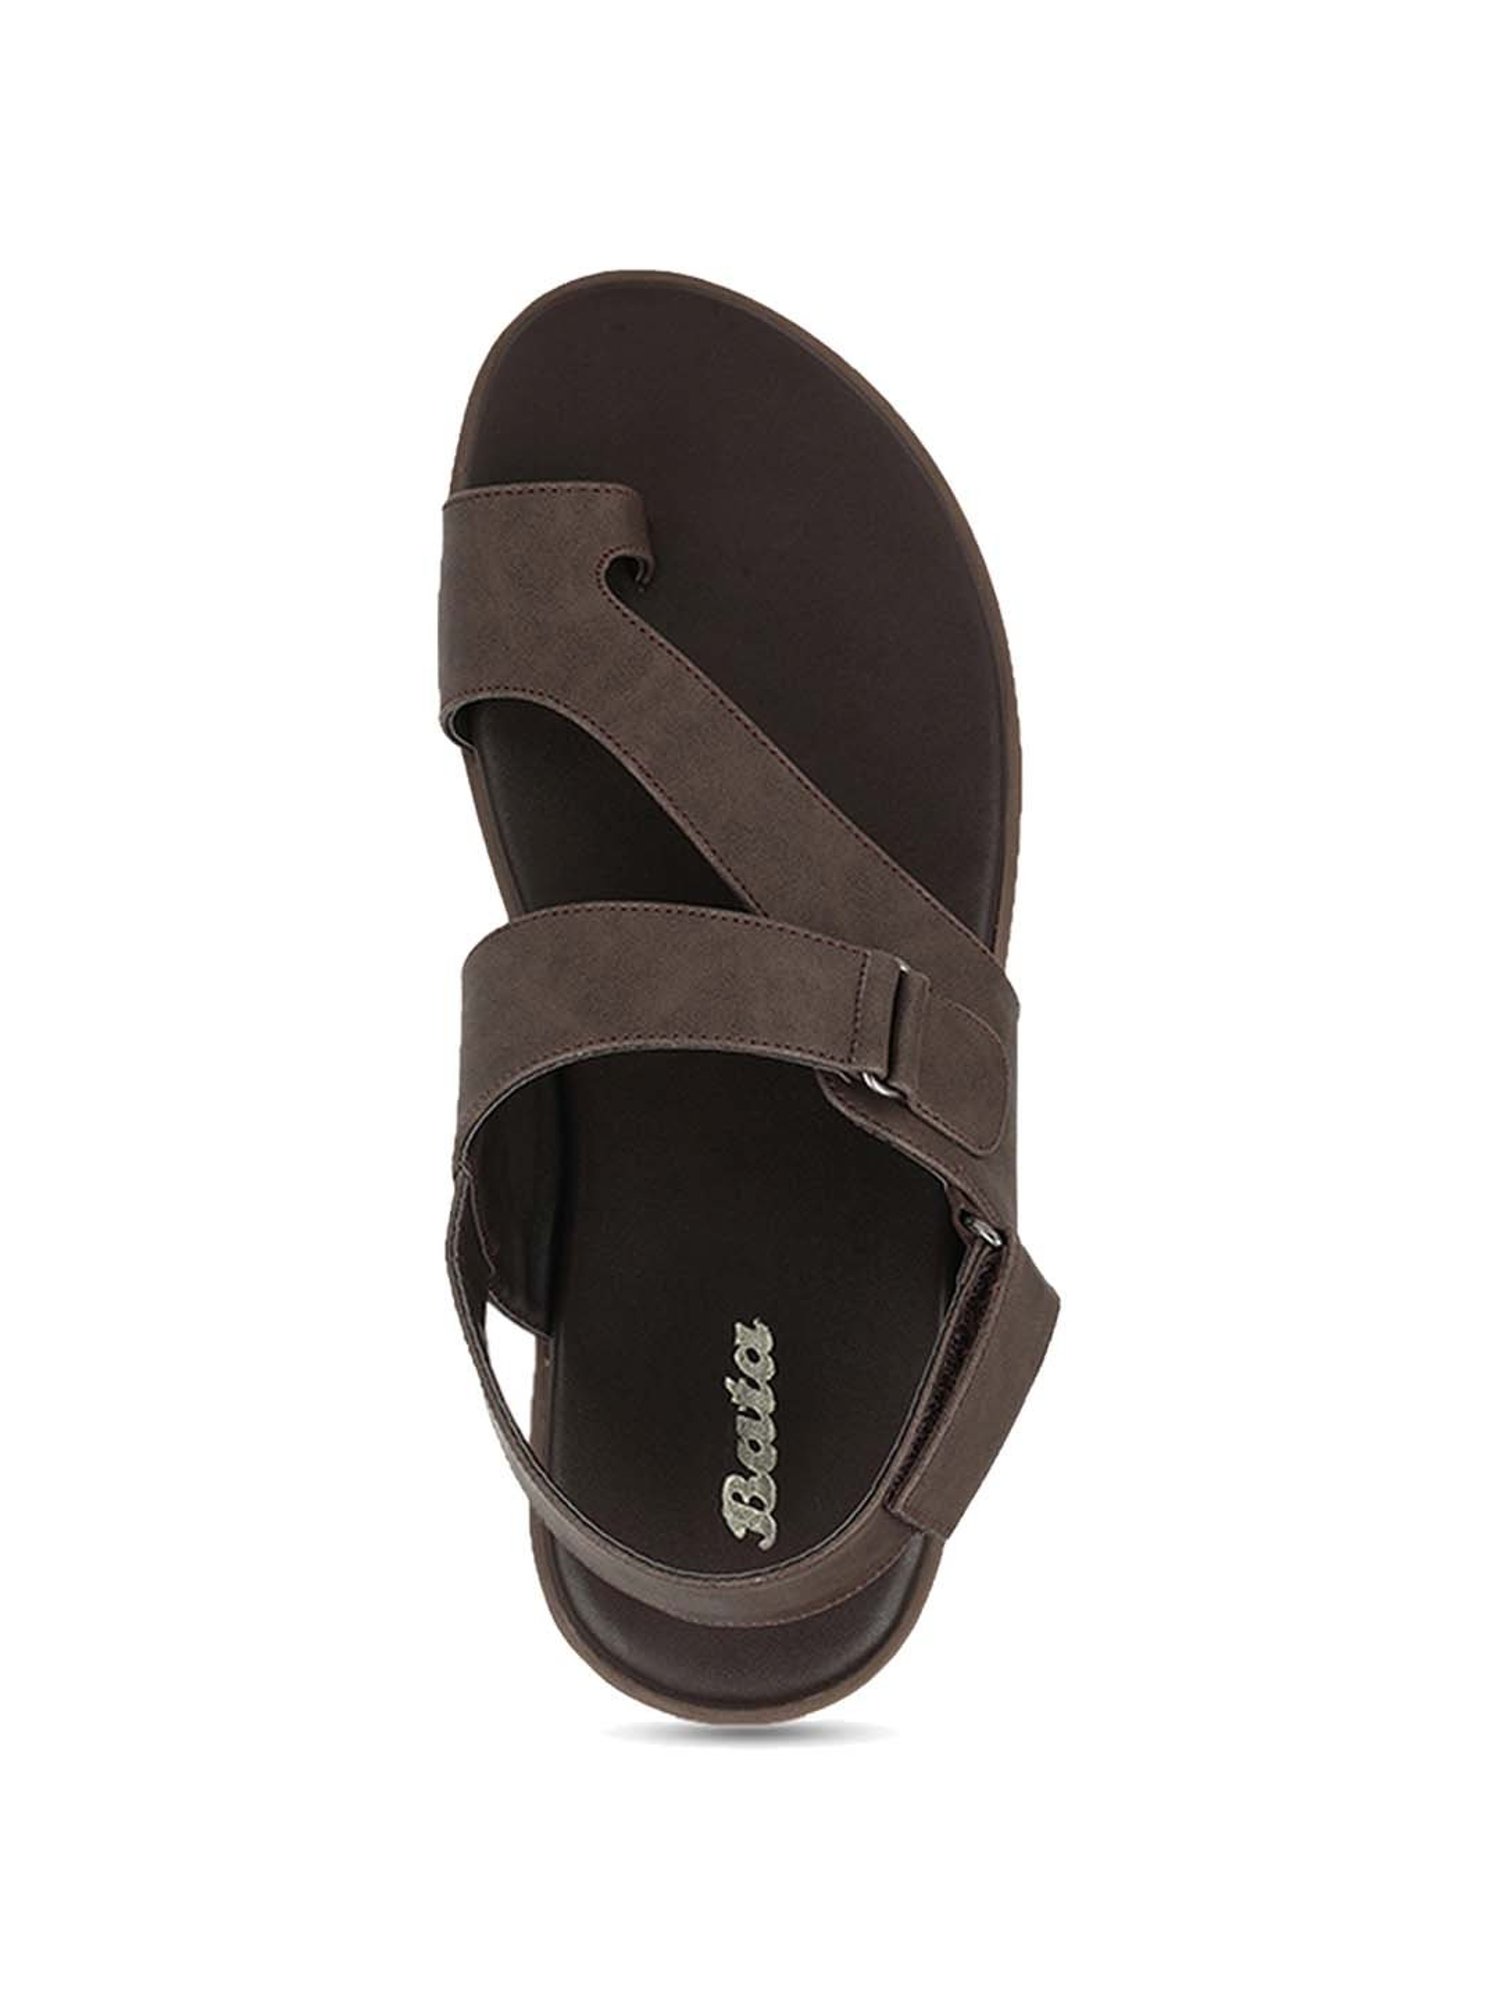 Buy Brown Sandals for Men by BATA Online | Ajio.com